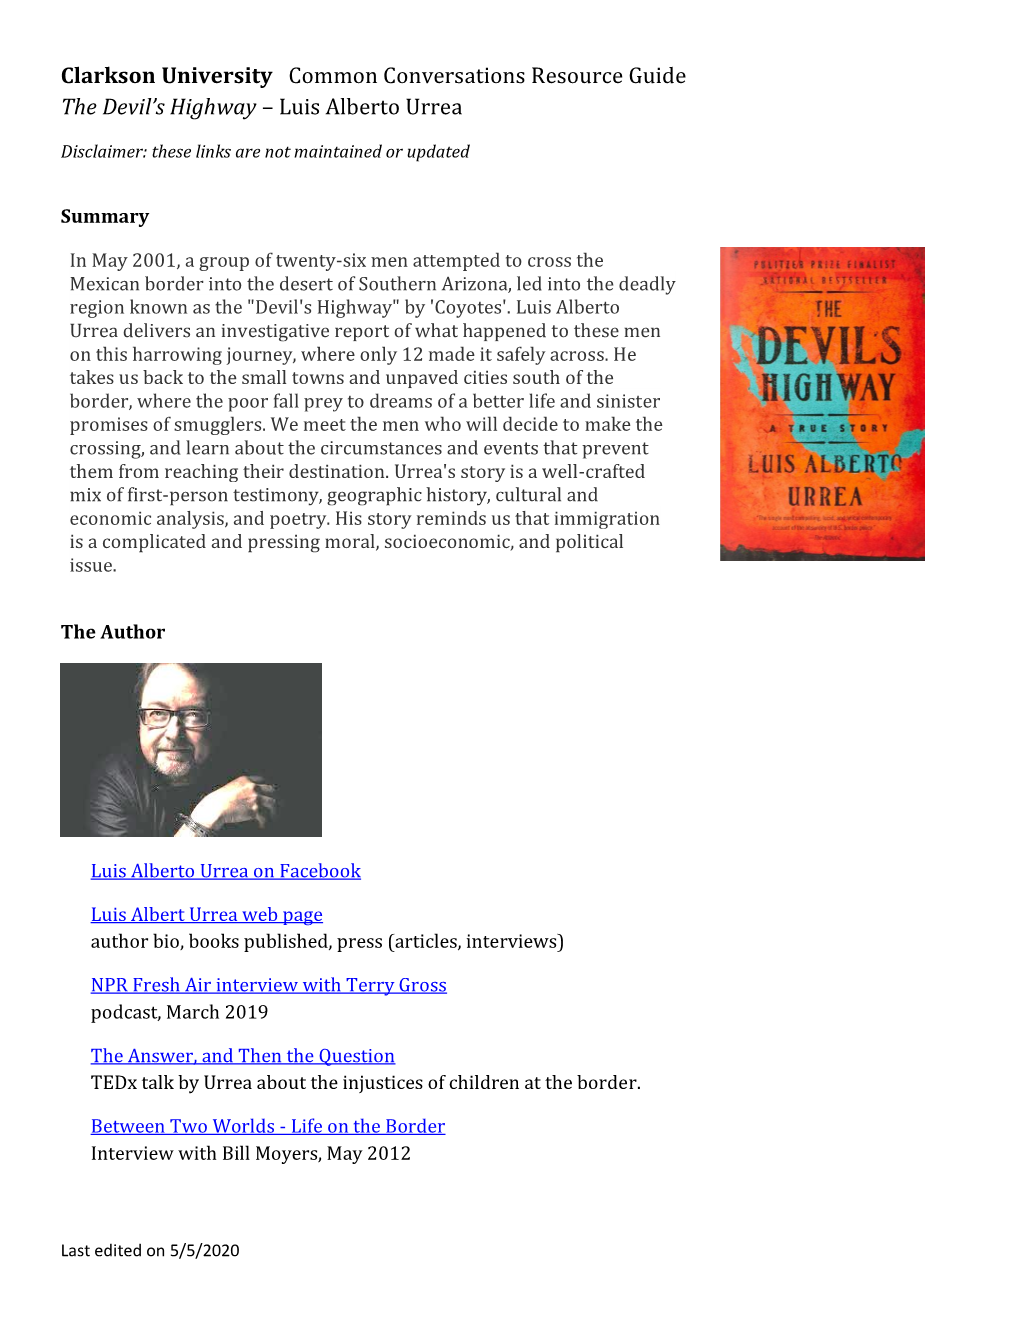 Clarkson University Common Conversations Resource Guide the Devil's Highway – Luis Alberto Urrea